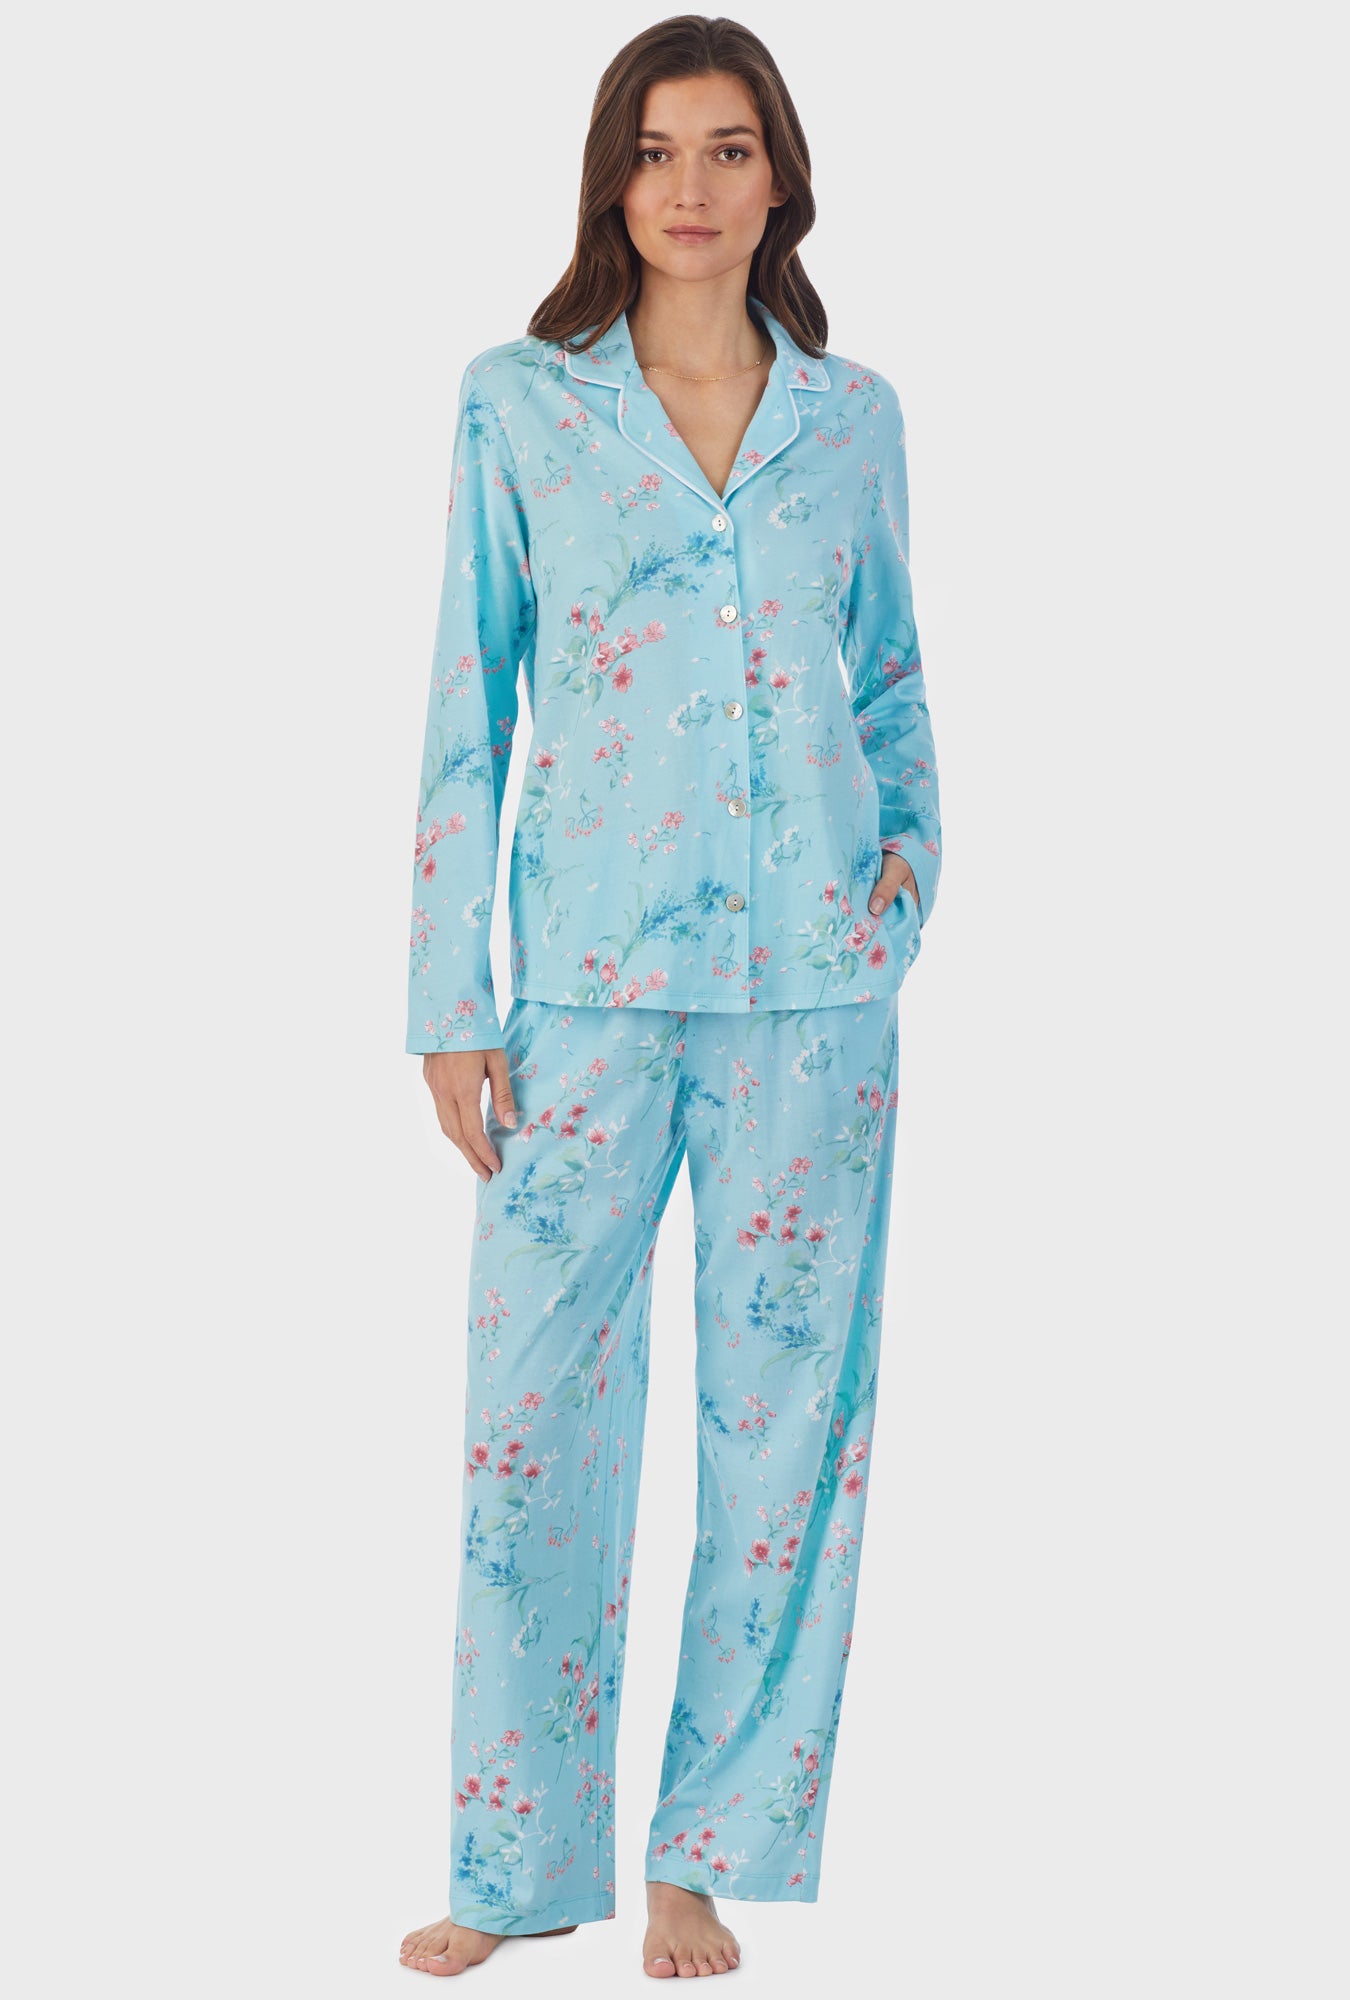 A lady wearing blue long pajama set with aqua floral print